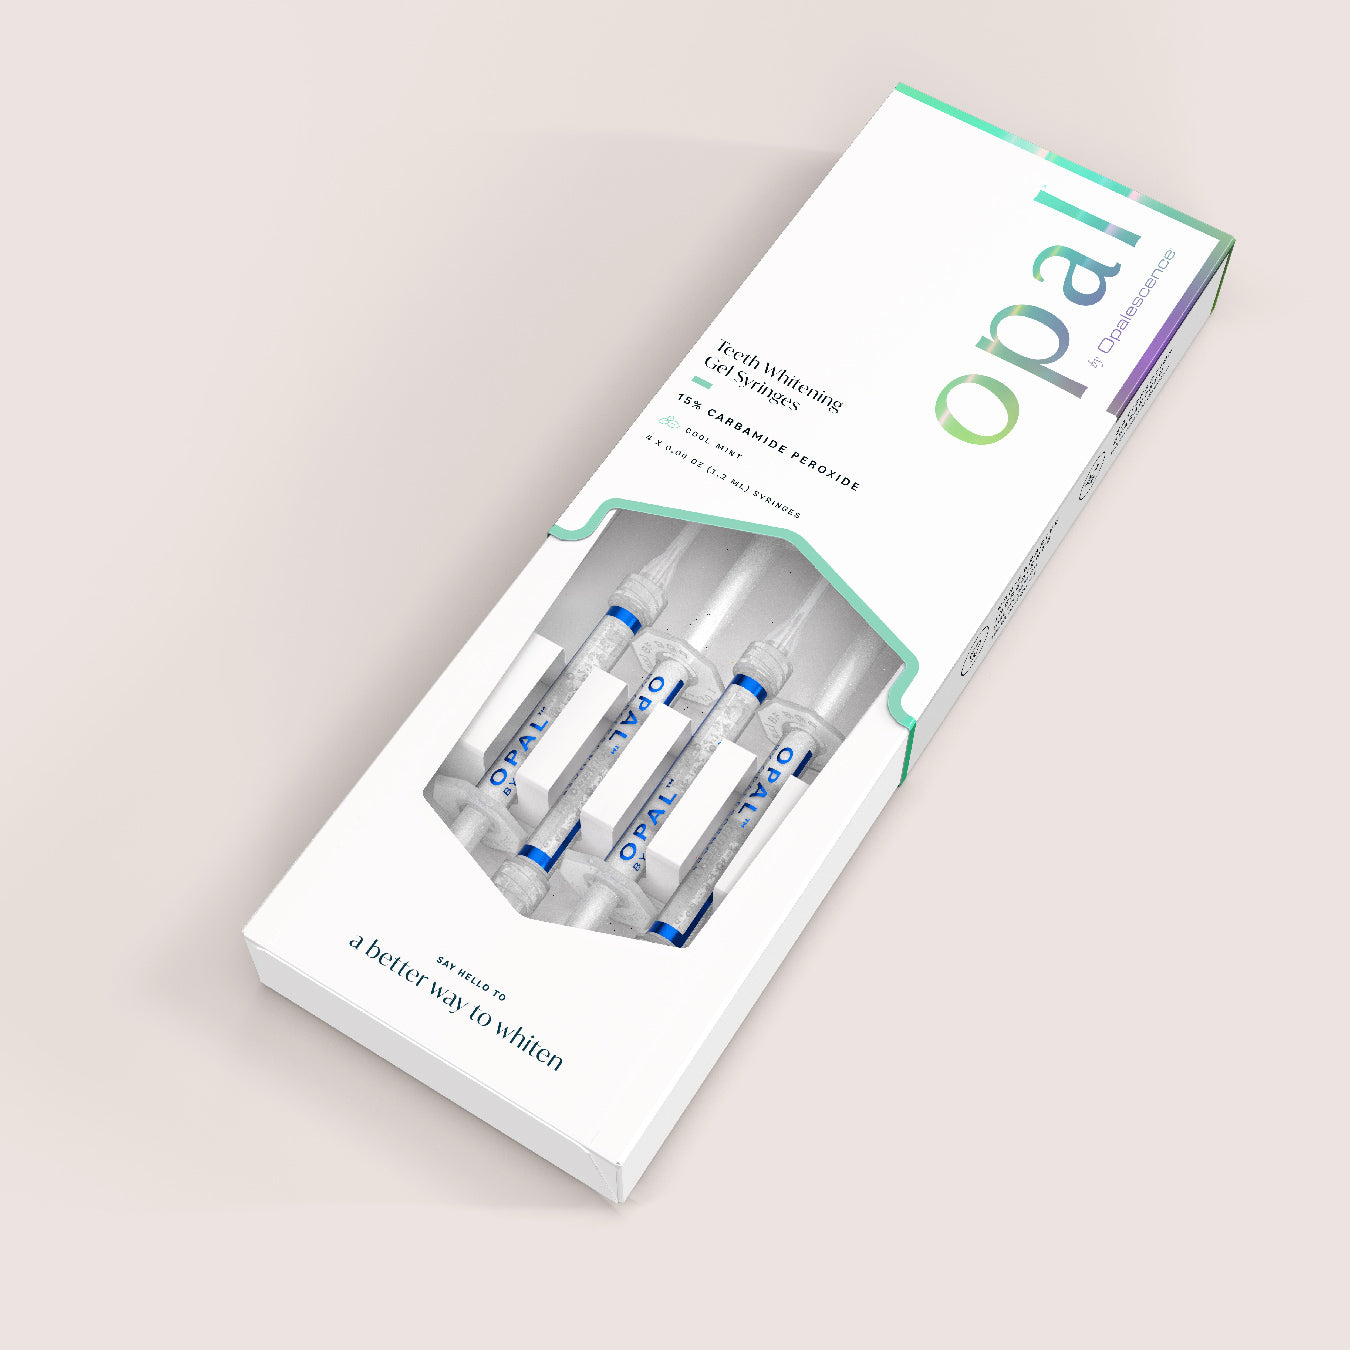 Opalescence PF 35% Mint - Patient Kit: 8 x 1.2 mL Syringes.